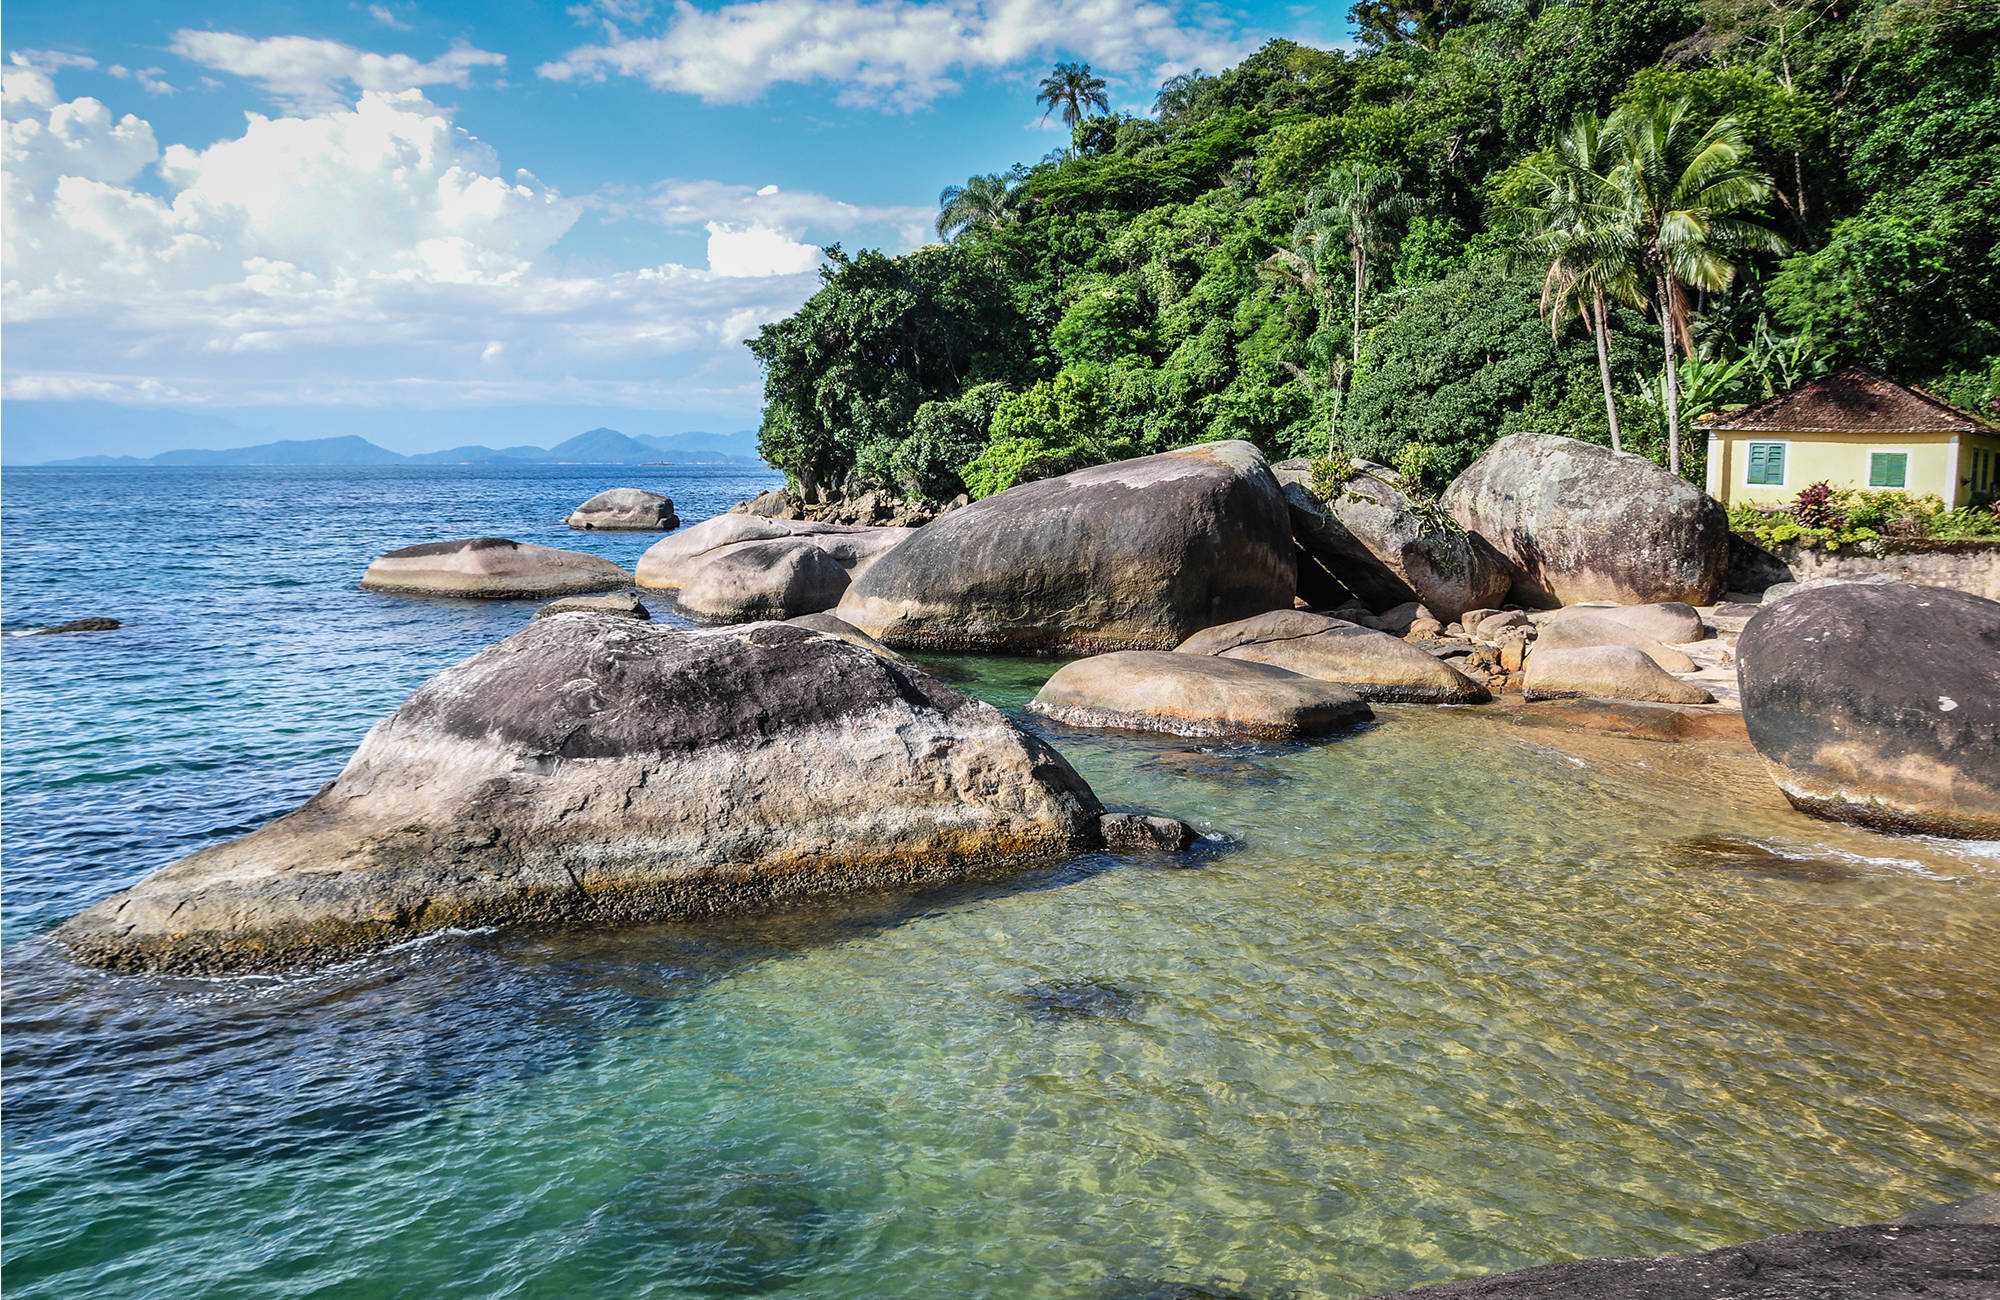 ilha-grande-brazil-beach-house-stones-cover